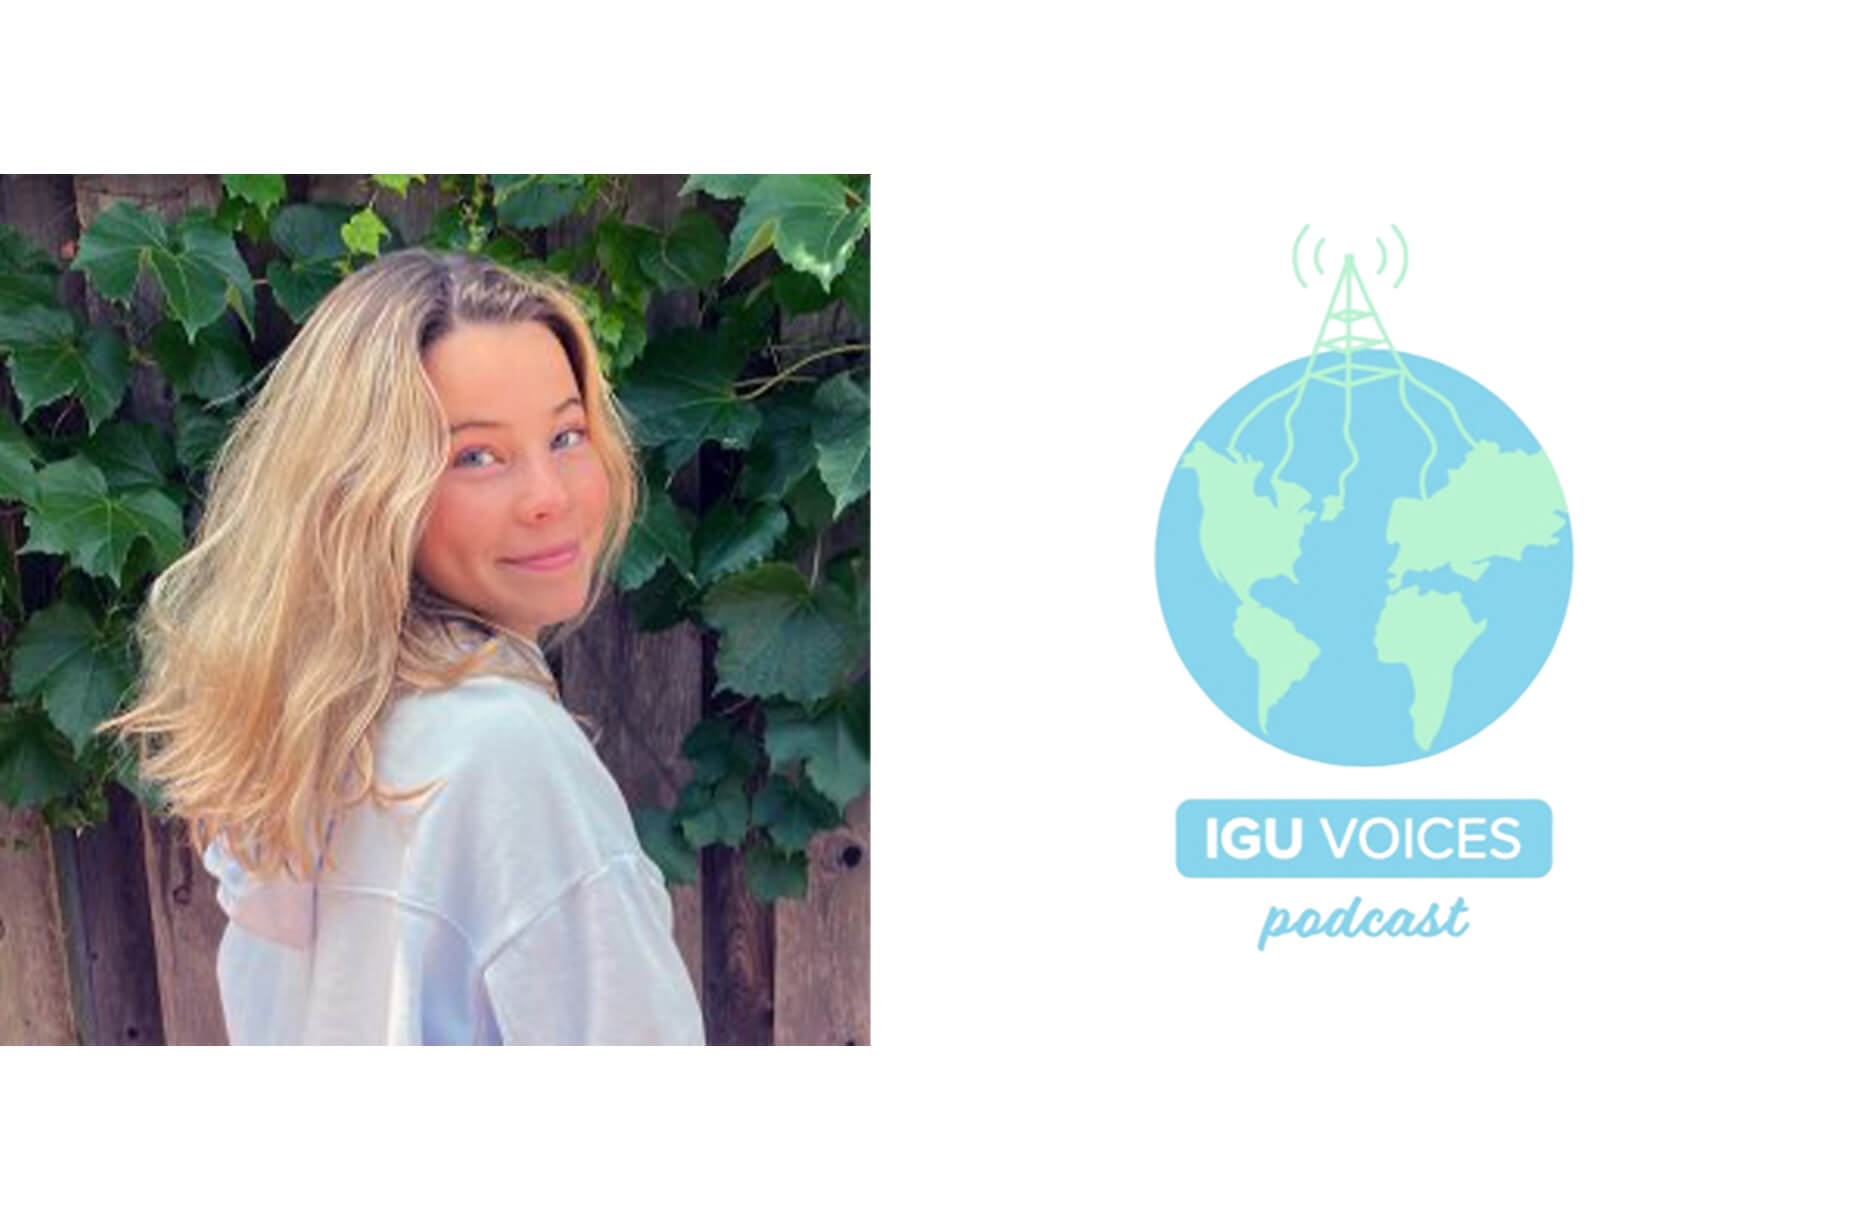 Student to lead IGU Voice podcast